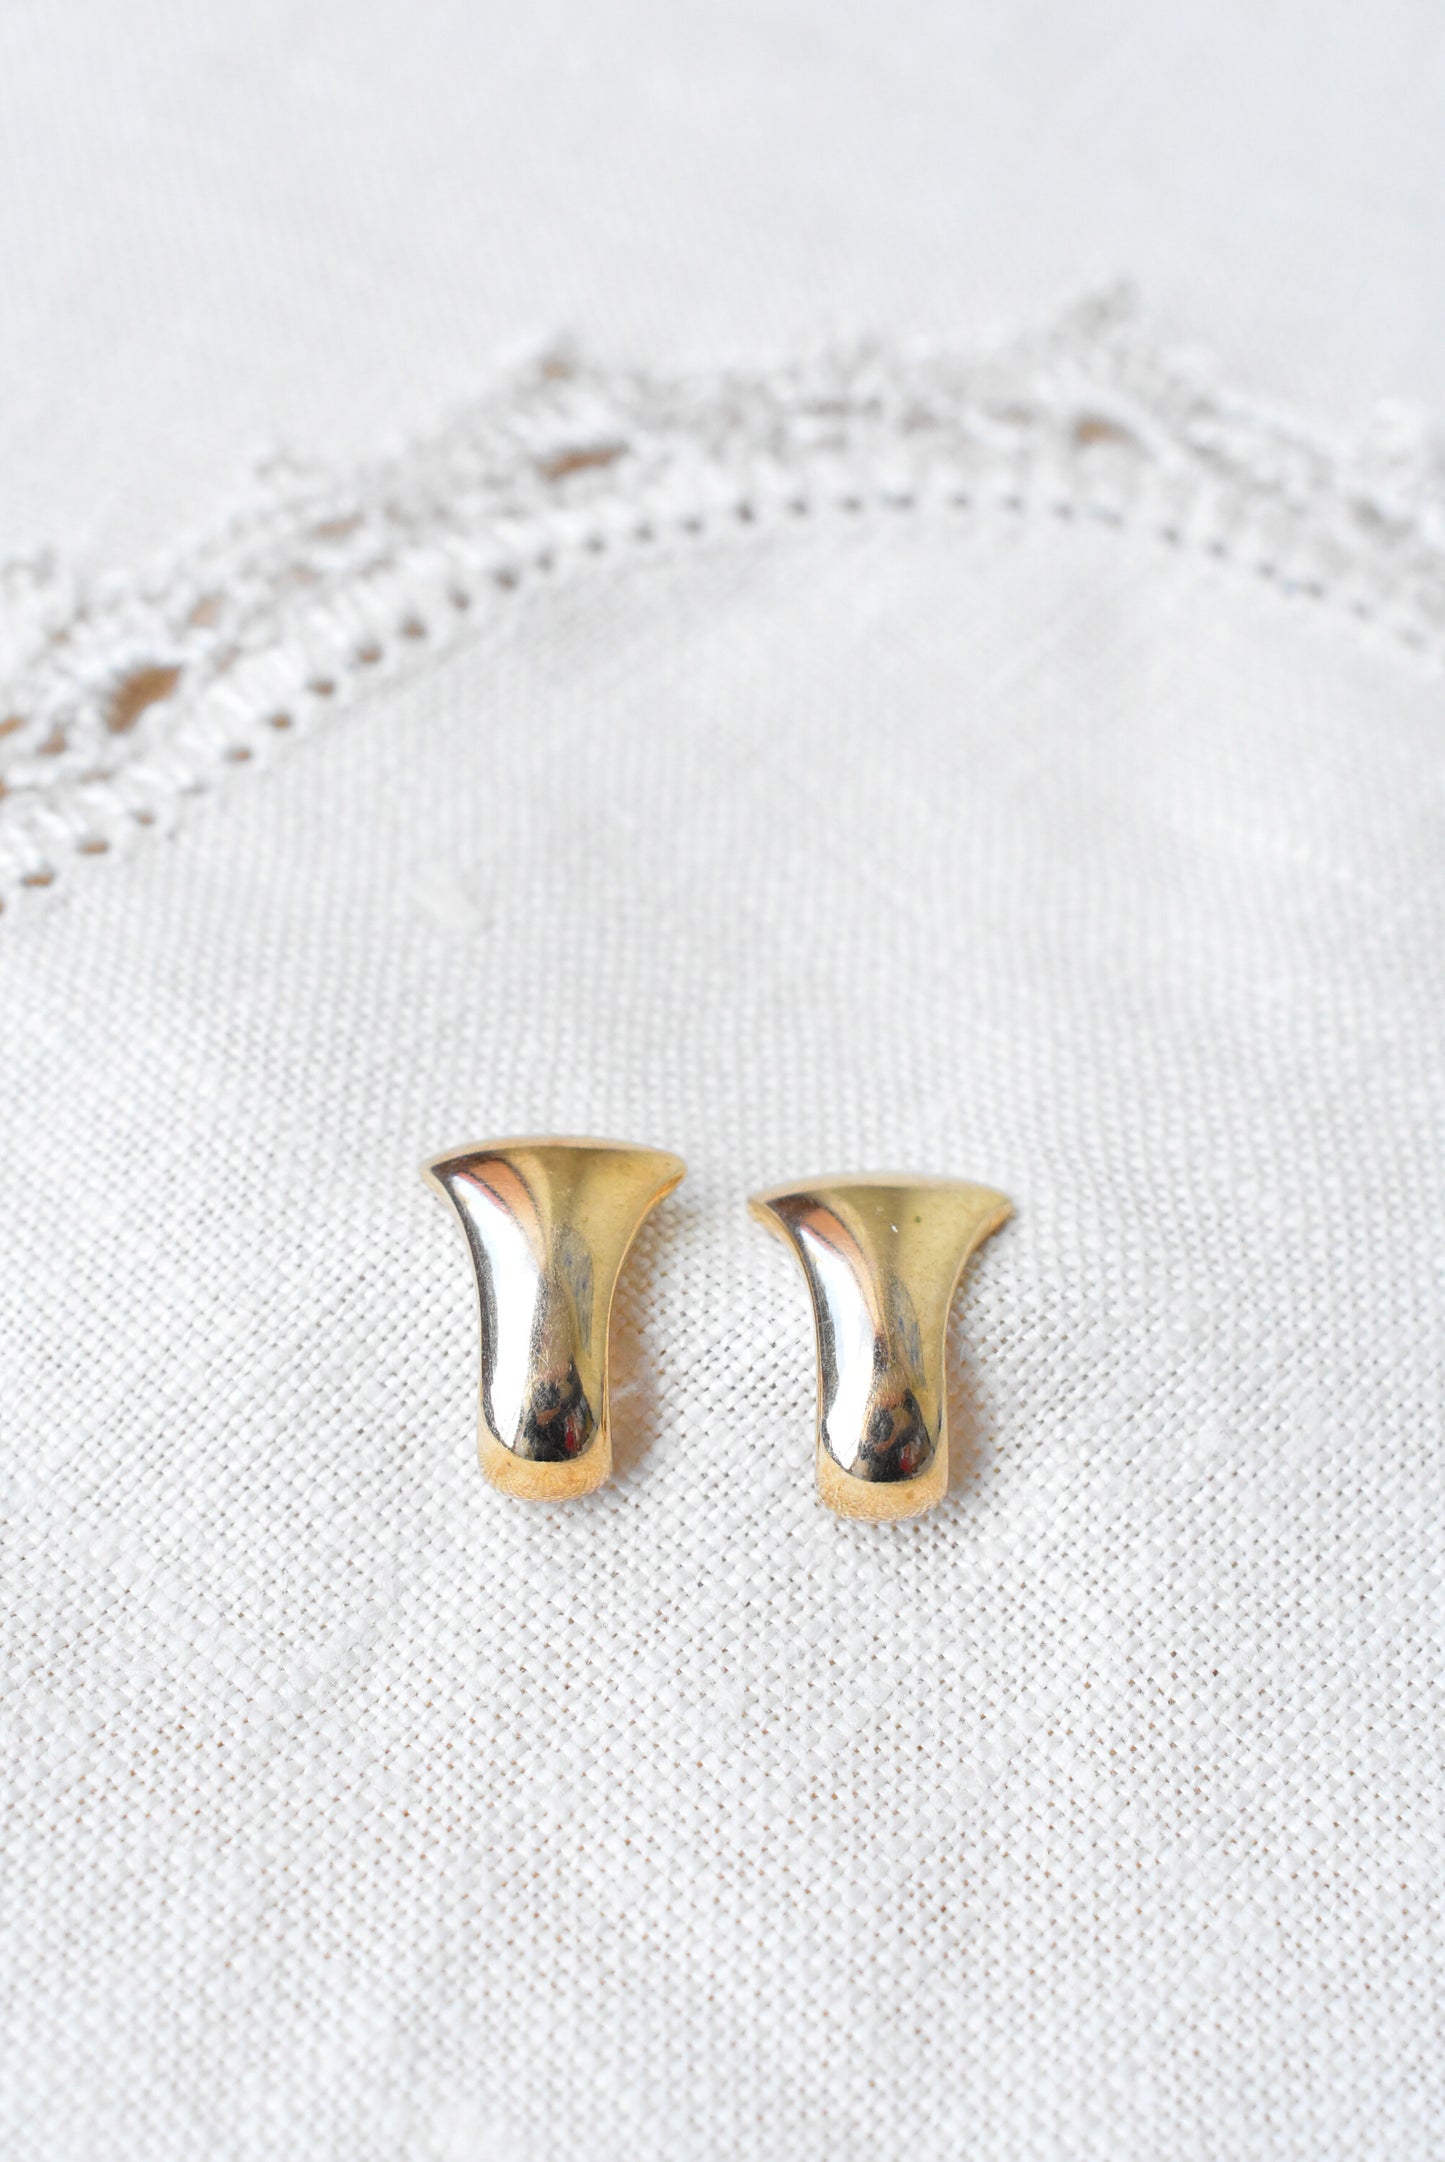 Chic 9k gold earrings